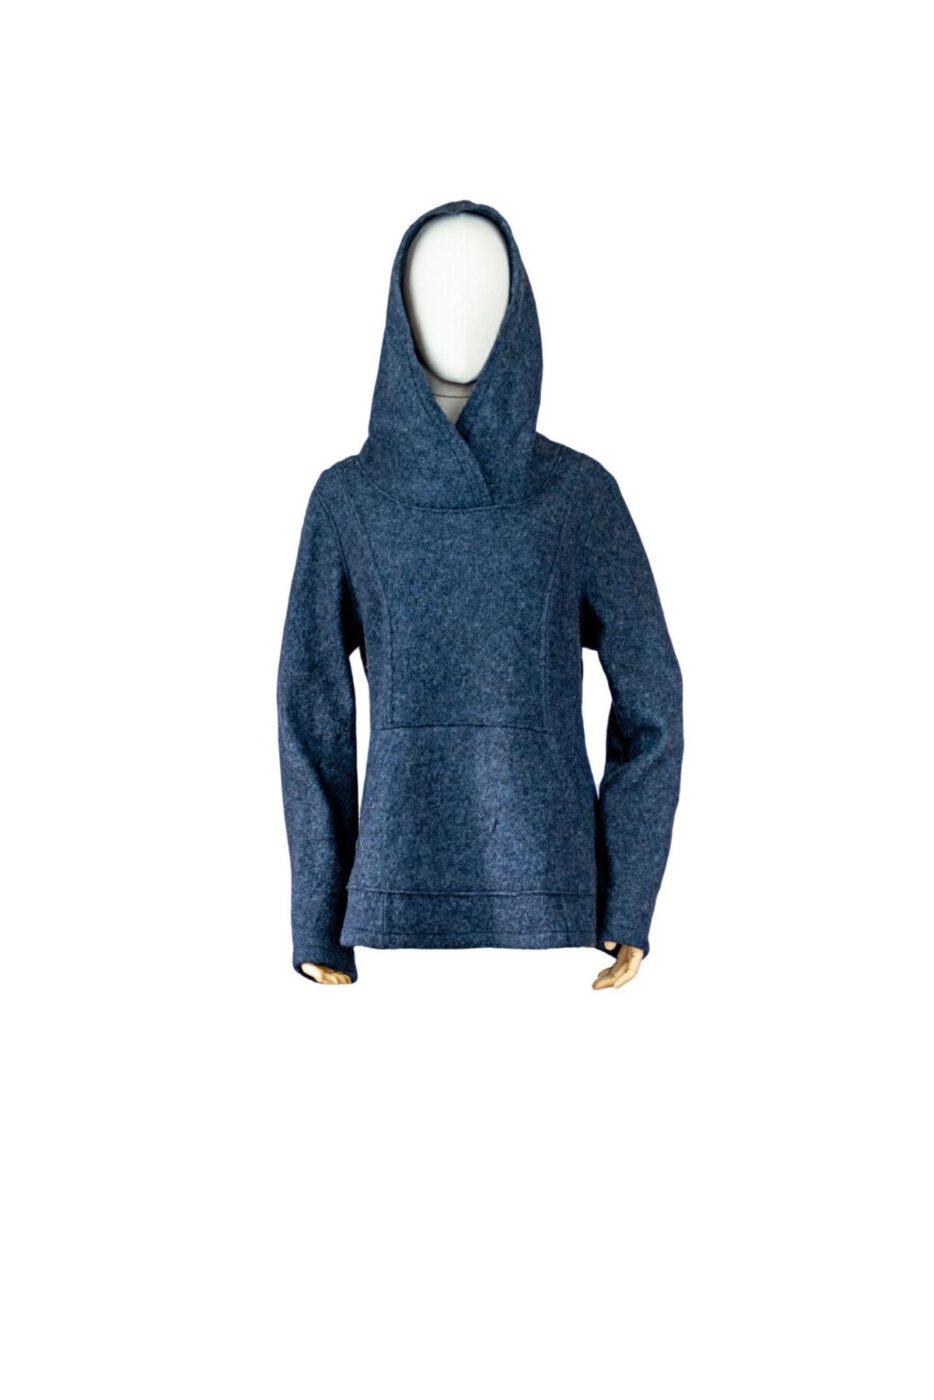 Women hoodie / hooded sweater model Celia